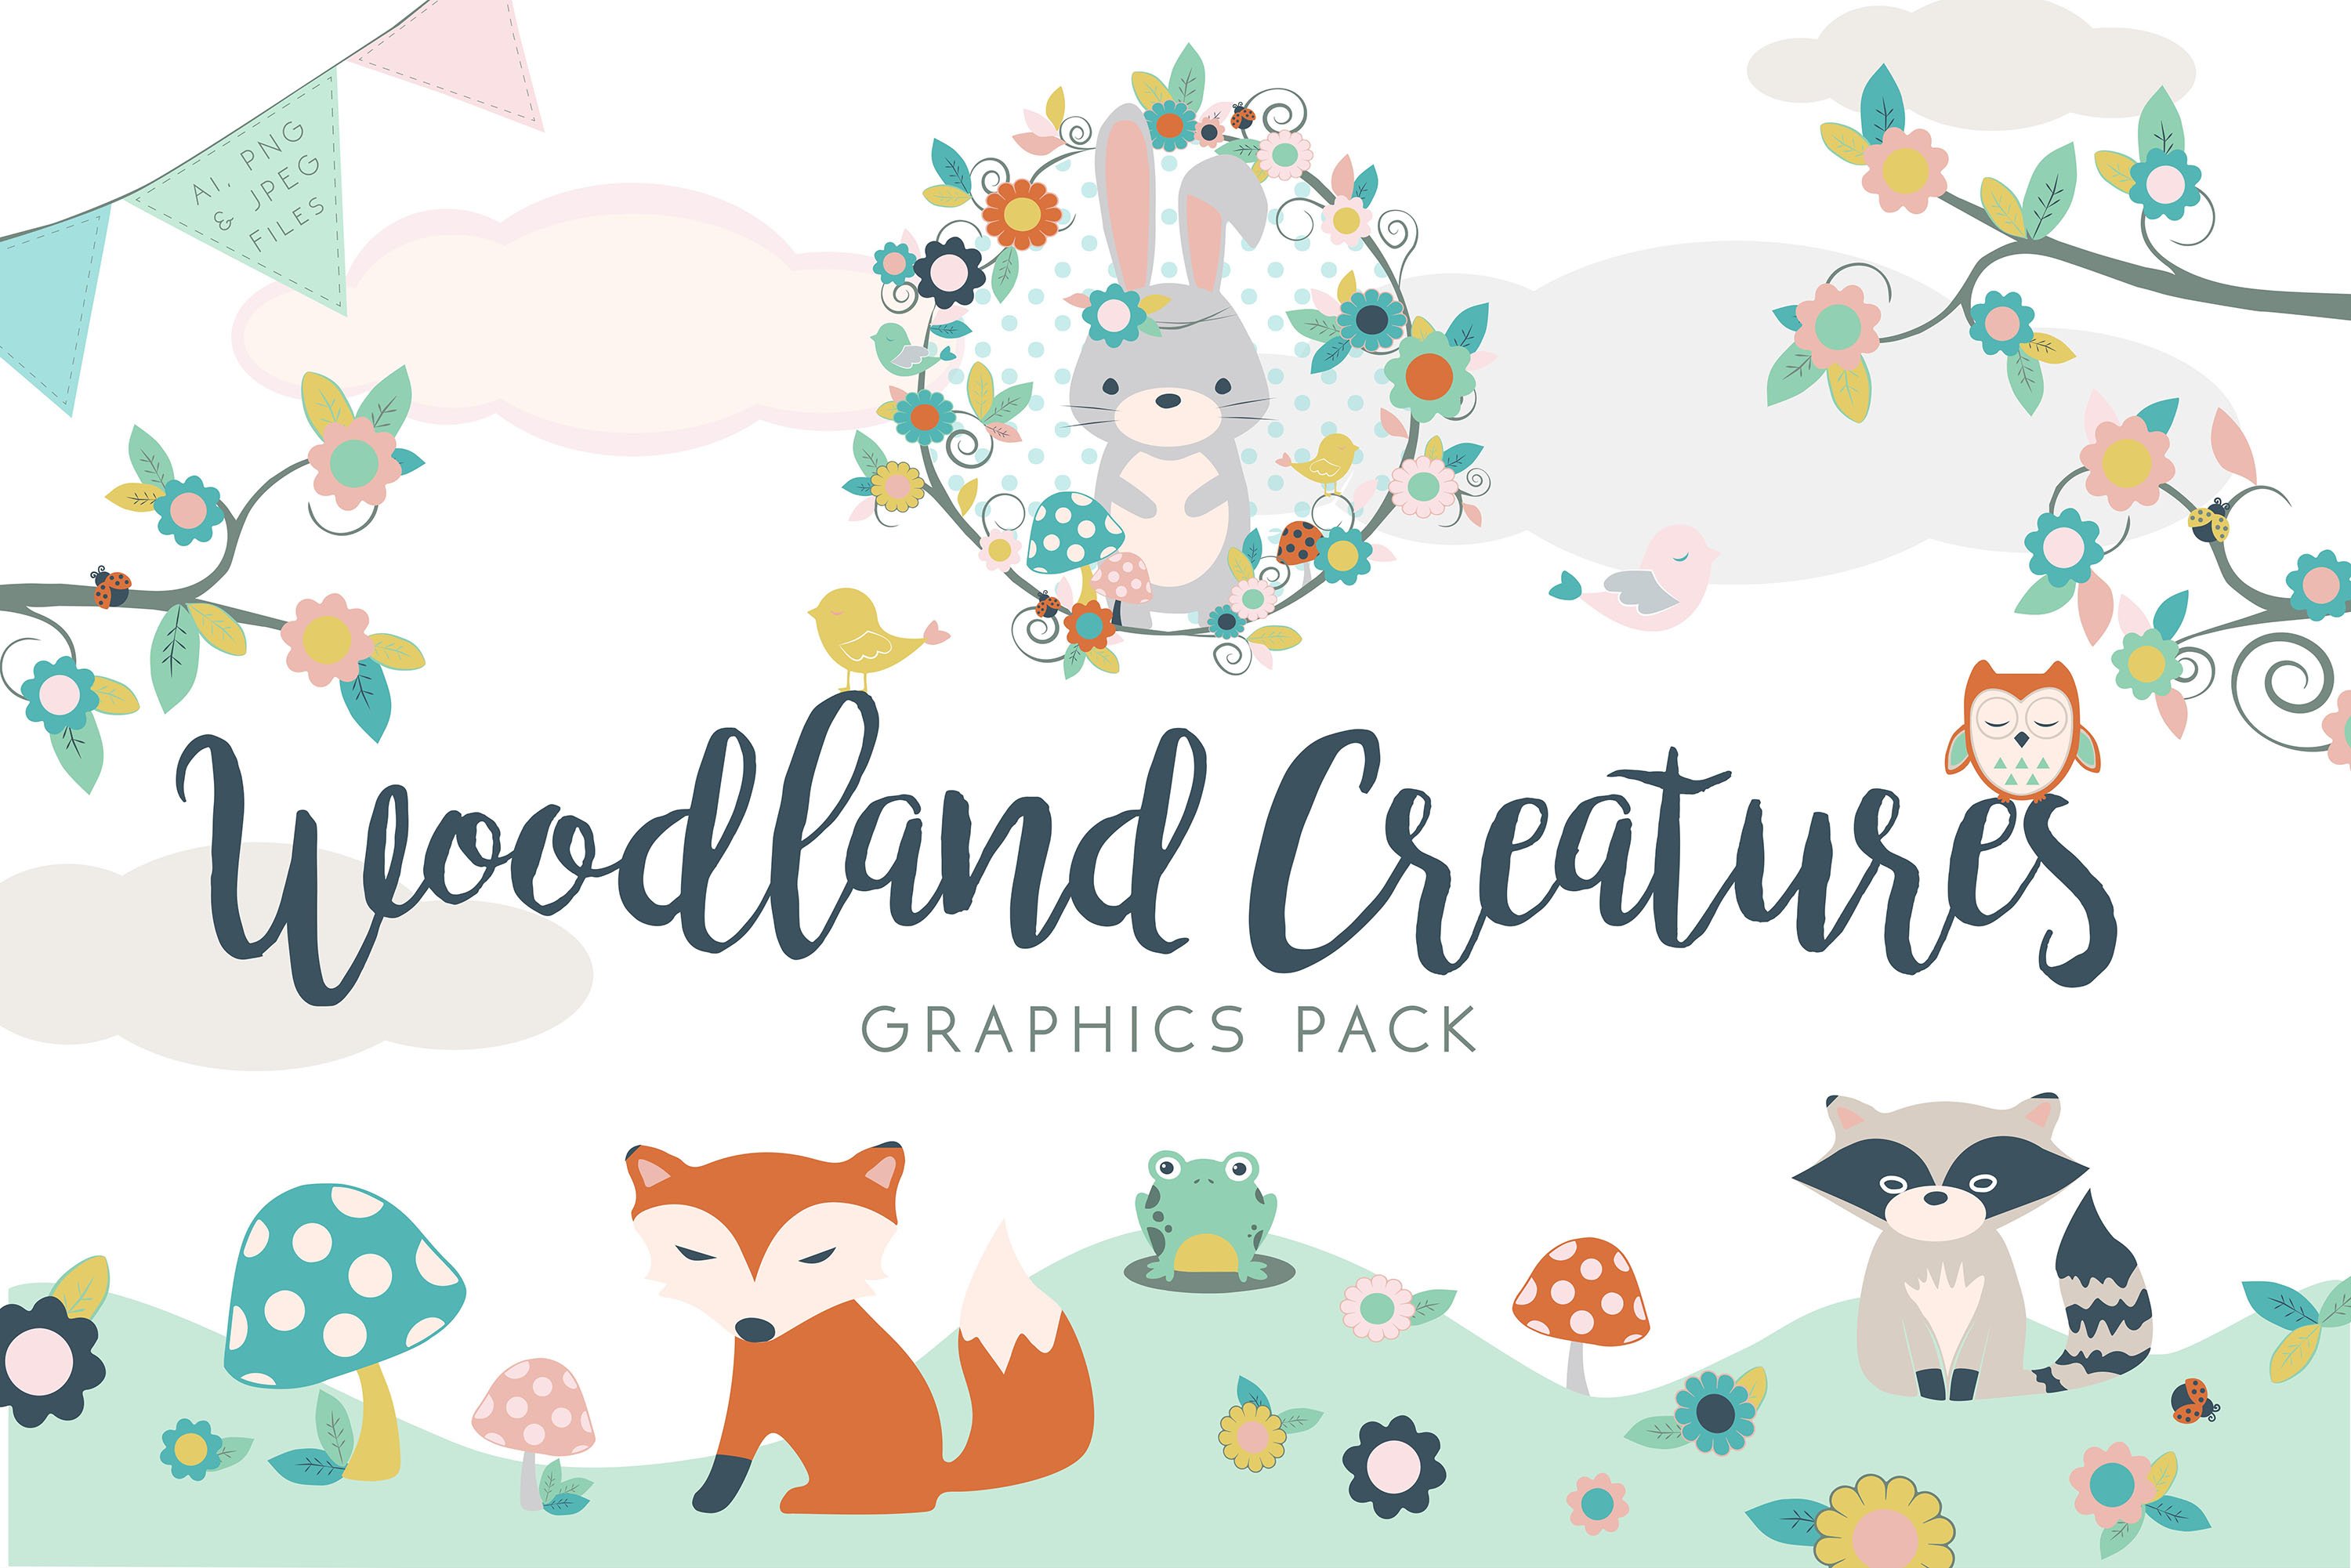 Woodland creatures graphic.